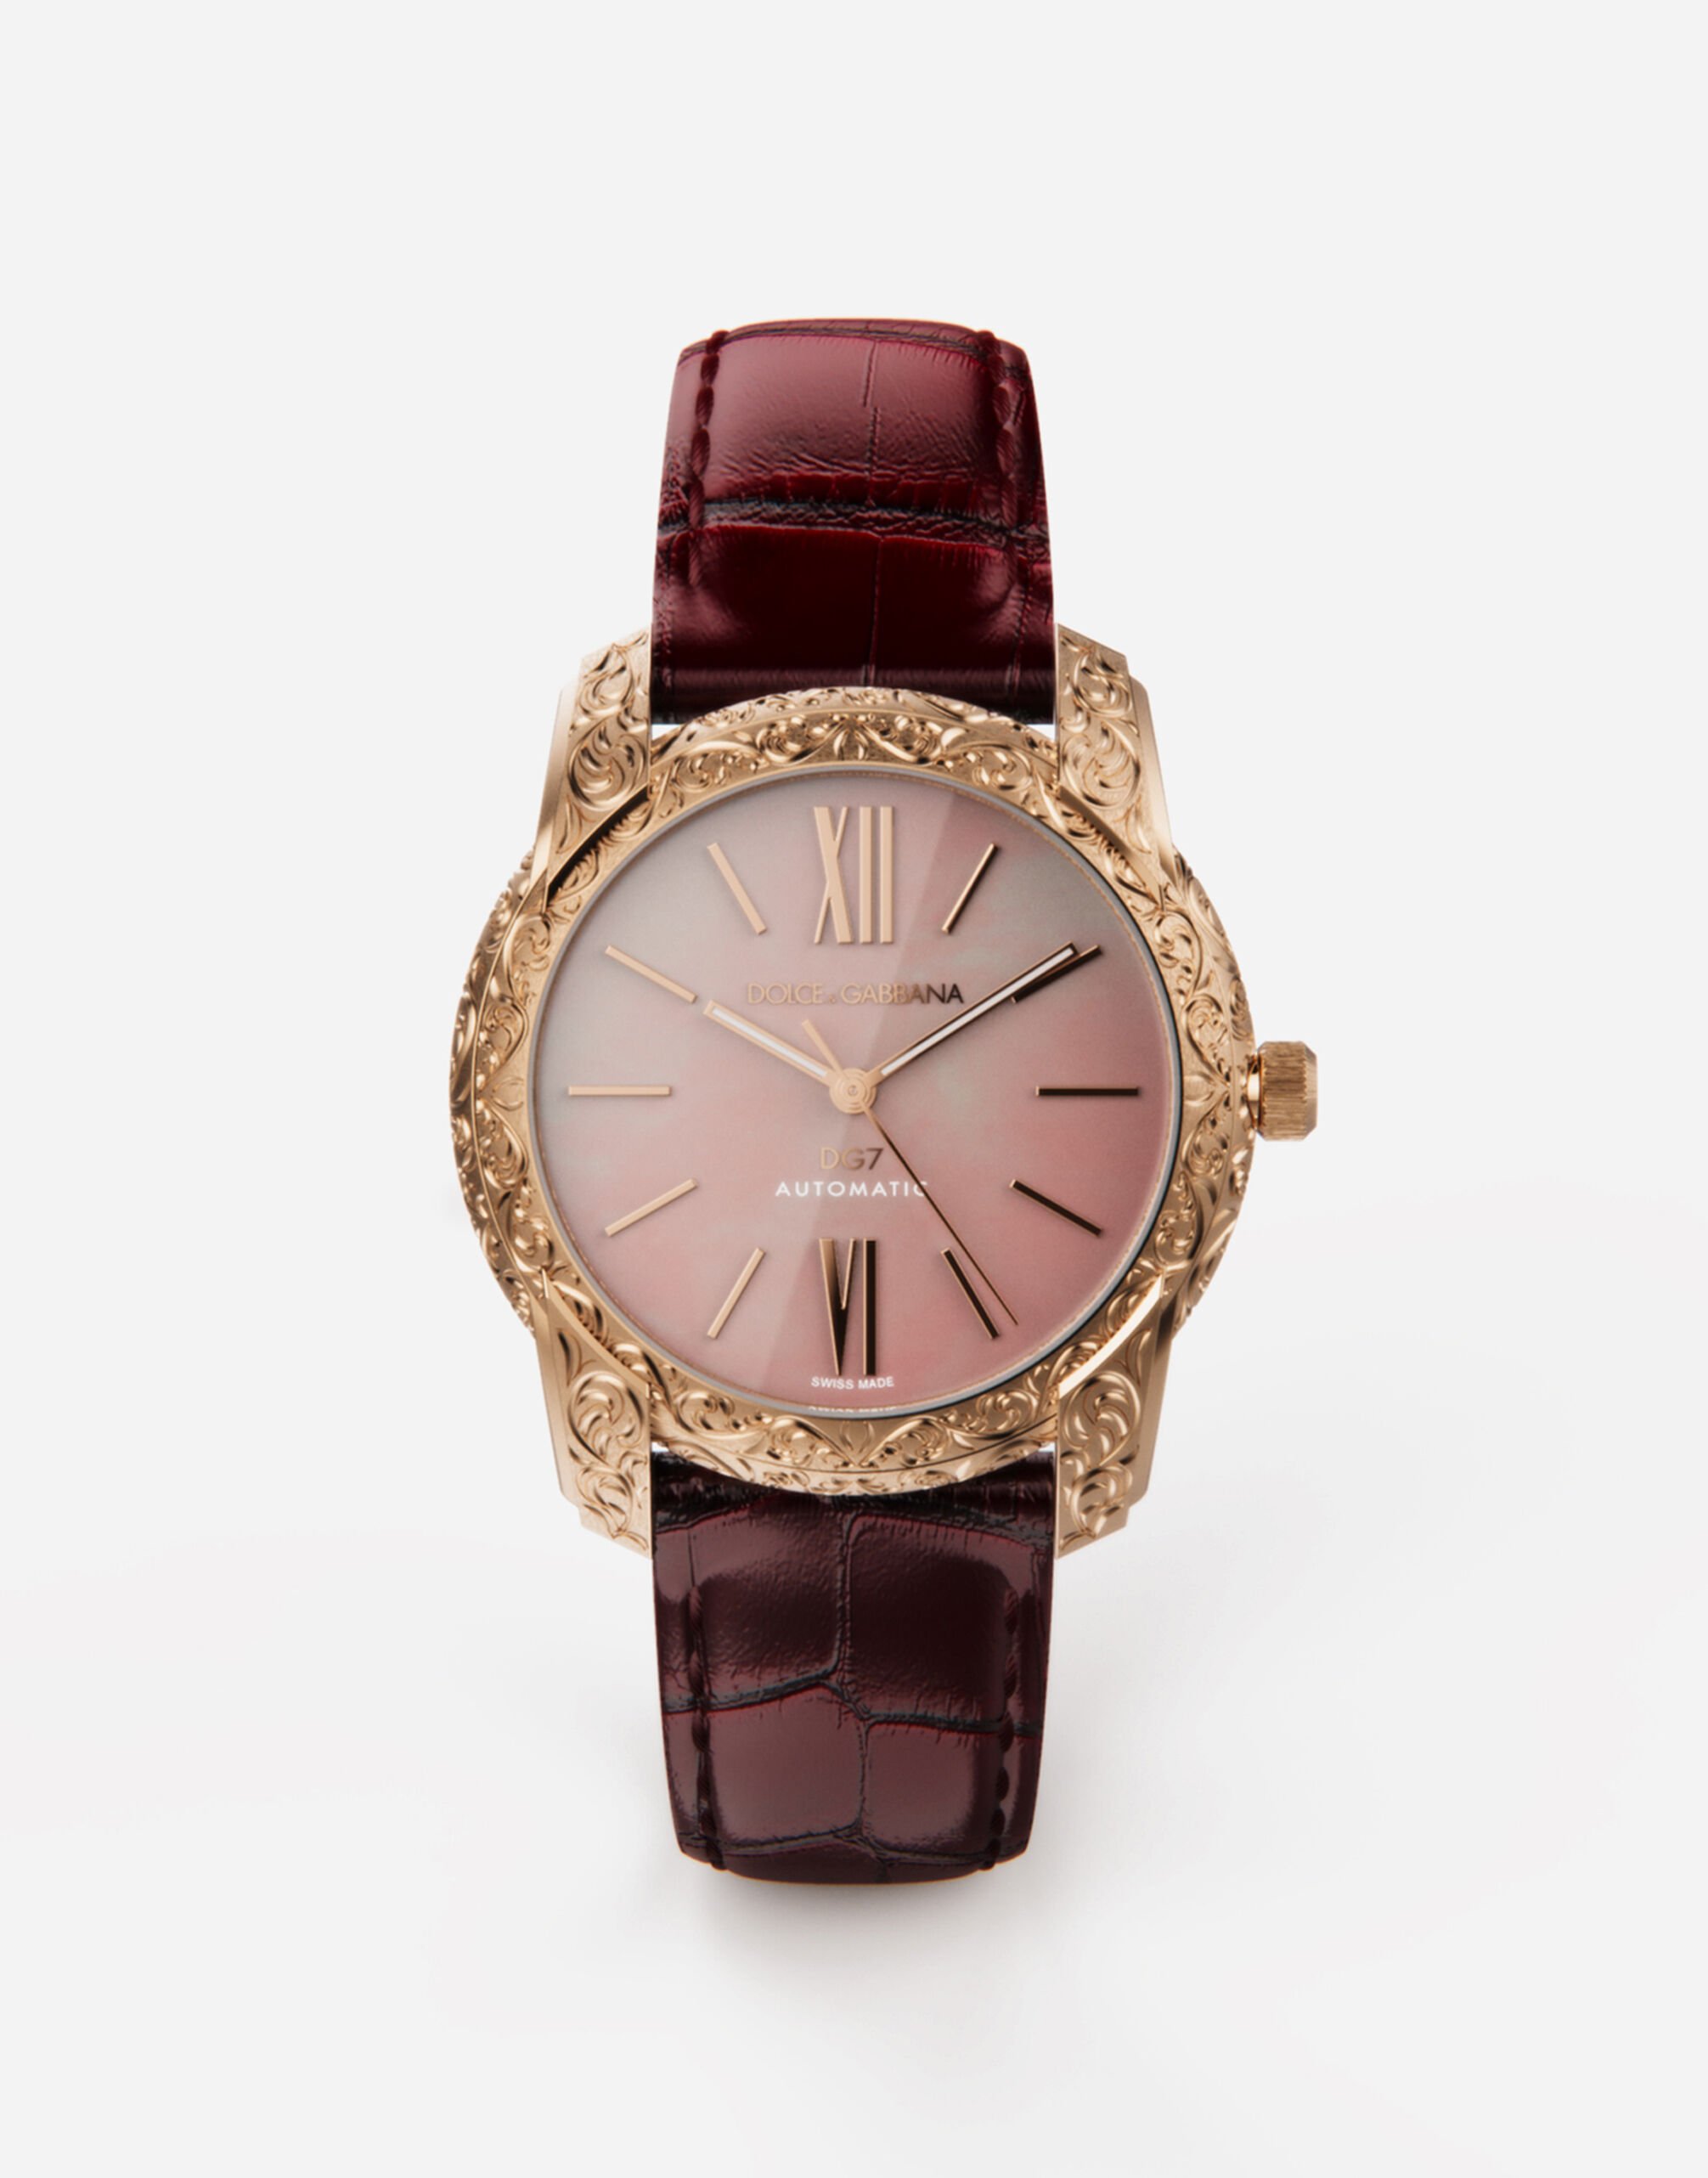 Dolce & Gabbana ساعة DG7 غاتوباردو من الذهب الأحمر مرصعة بعرق اللؤلؤ الوردي ذهبي WRLK1GWJAS1